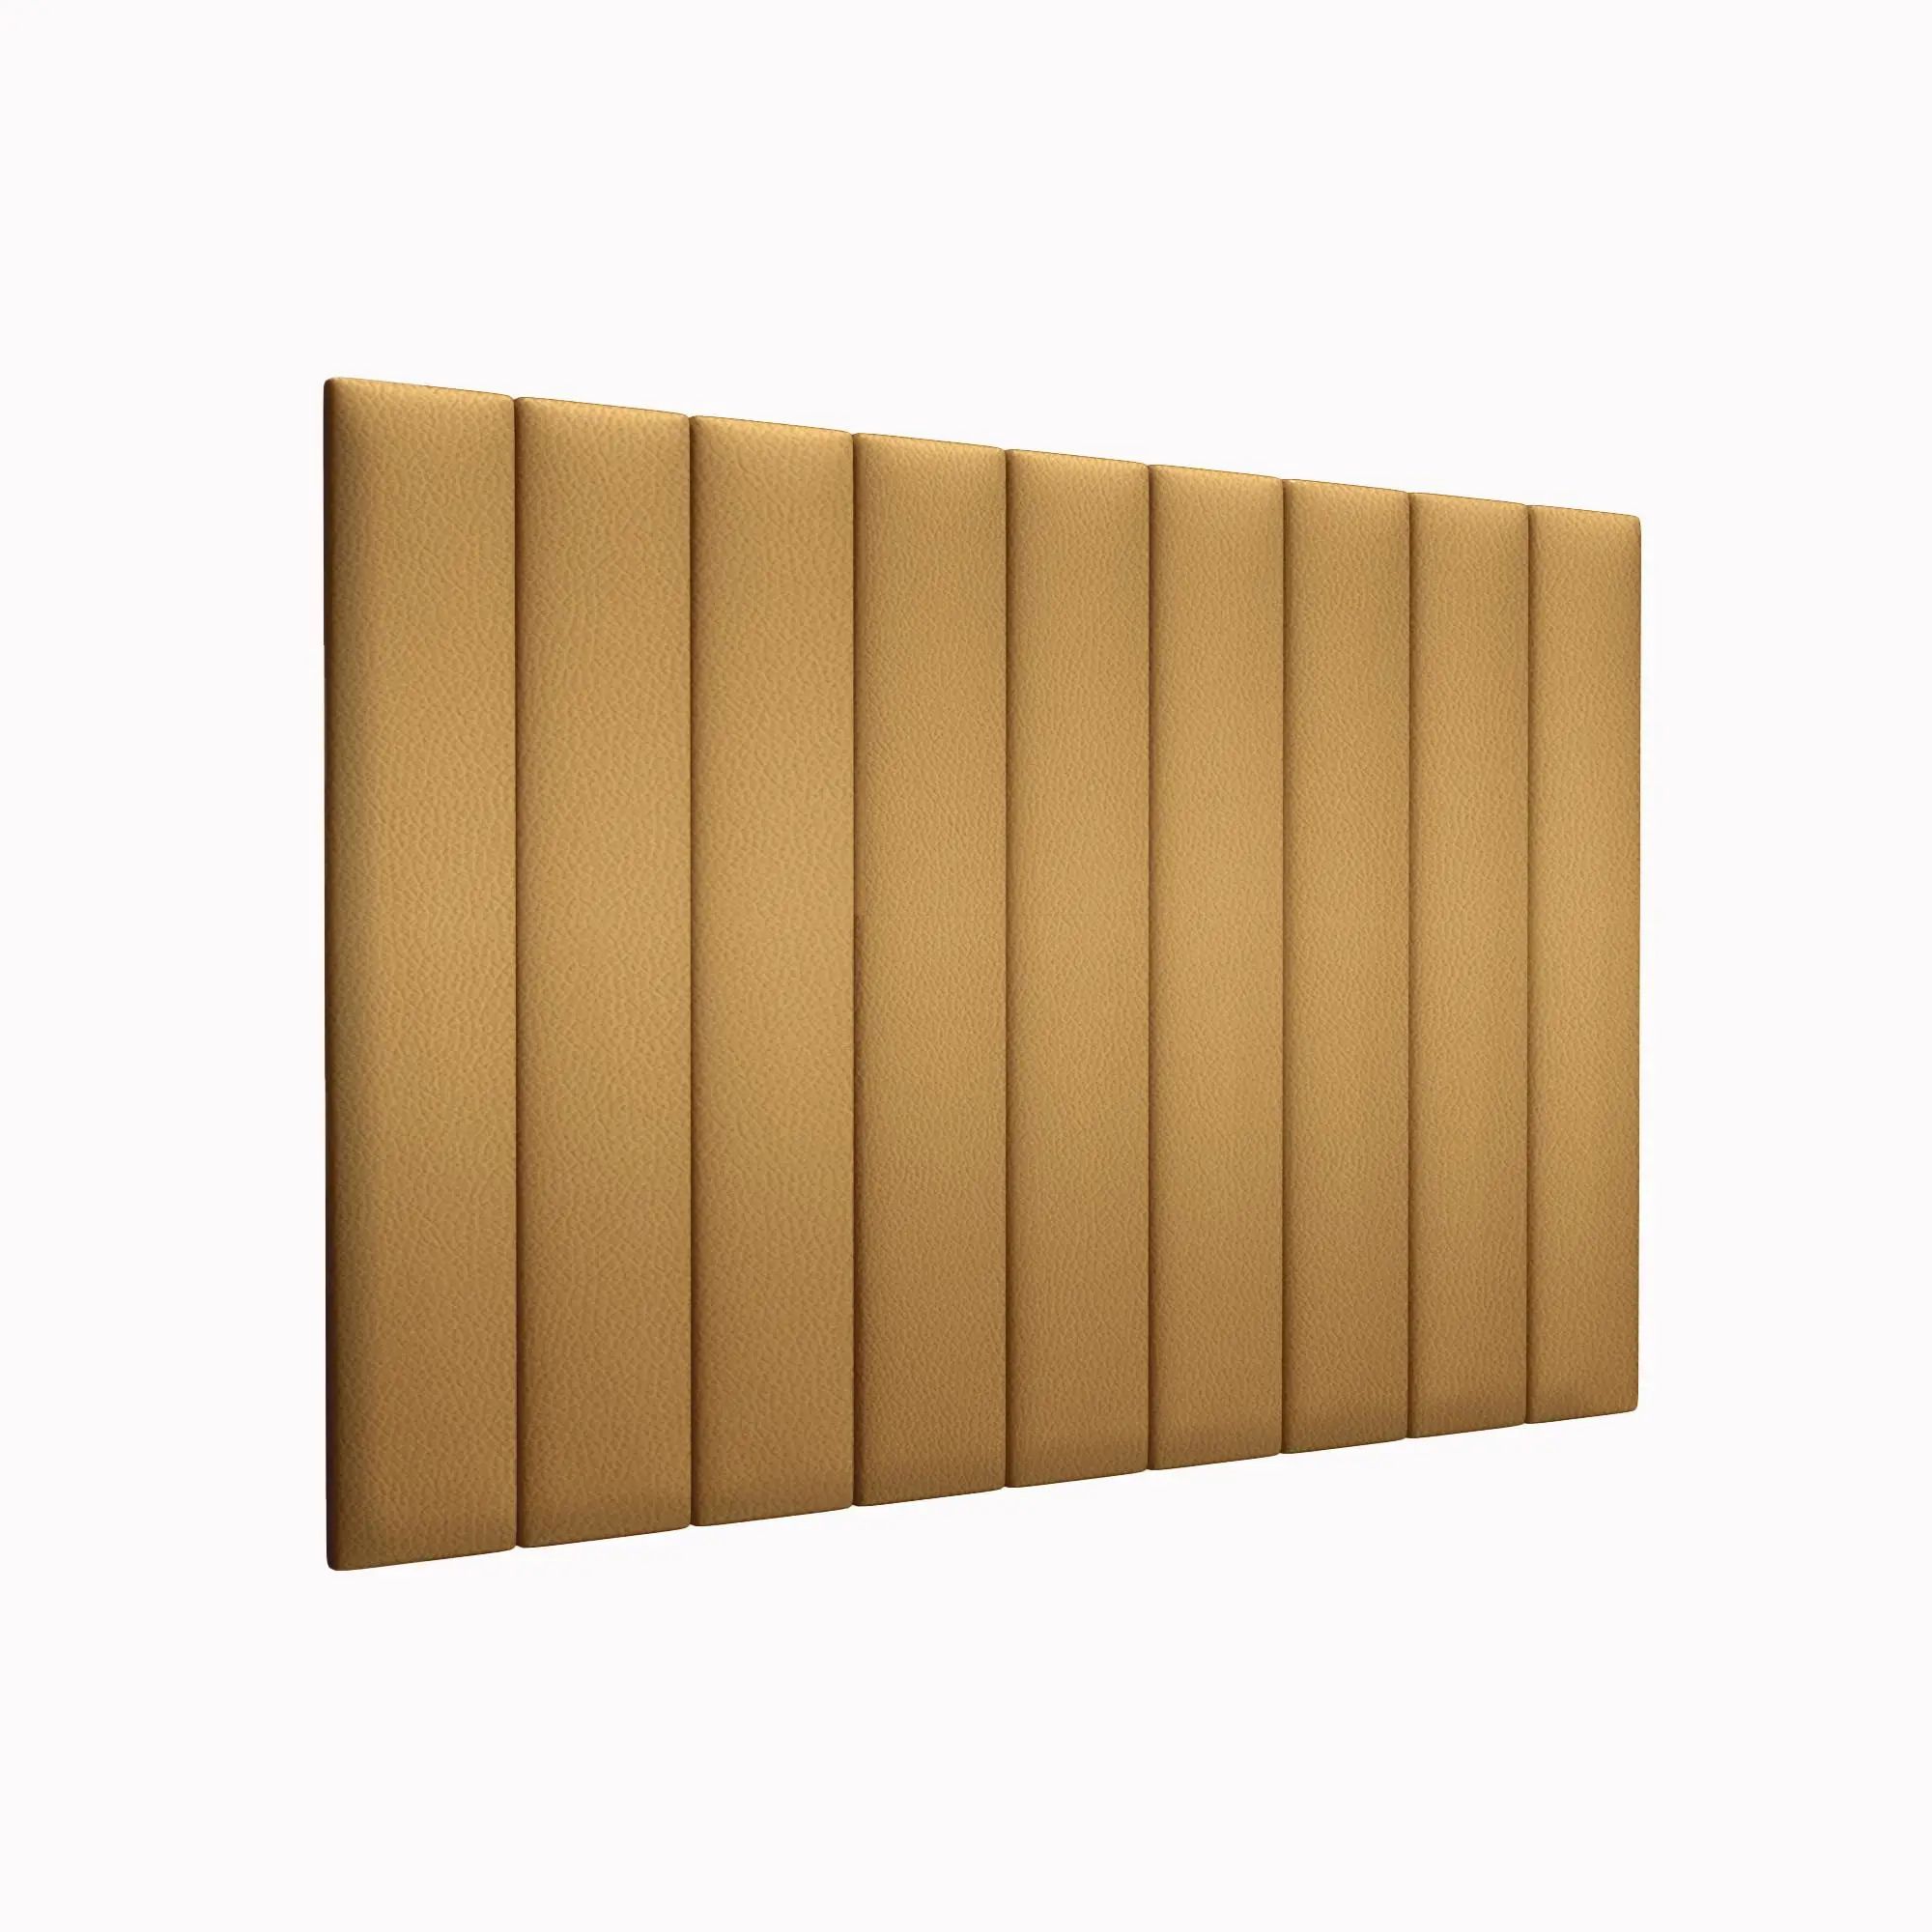 Стеновая панель Eco Leather Gold 15х90 см 4 шт.